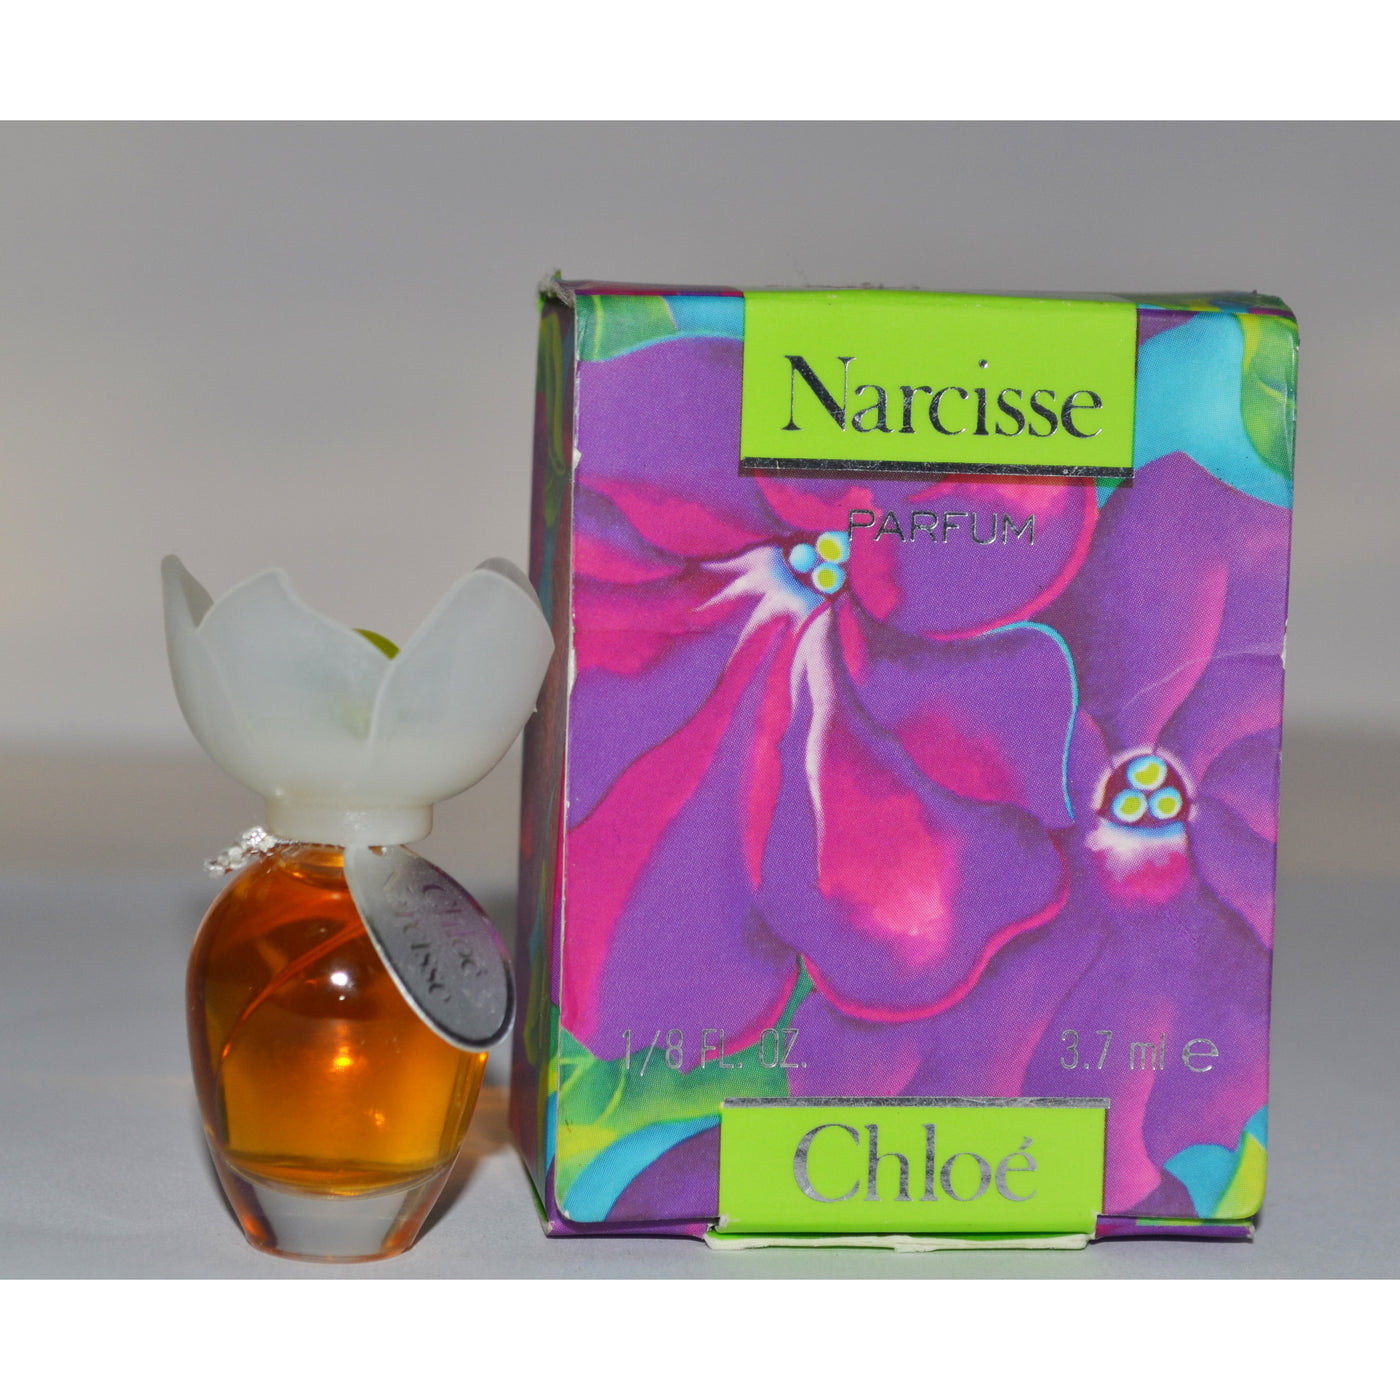 Narcisse Parfum Mini By Chloe 